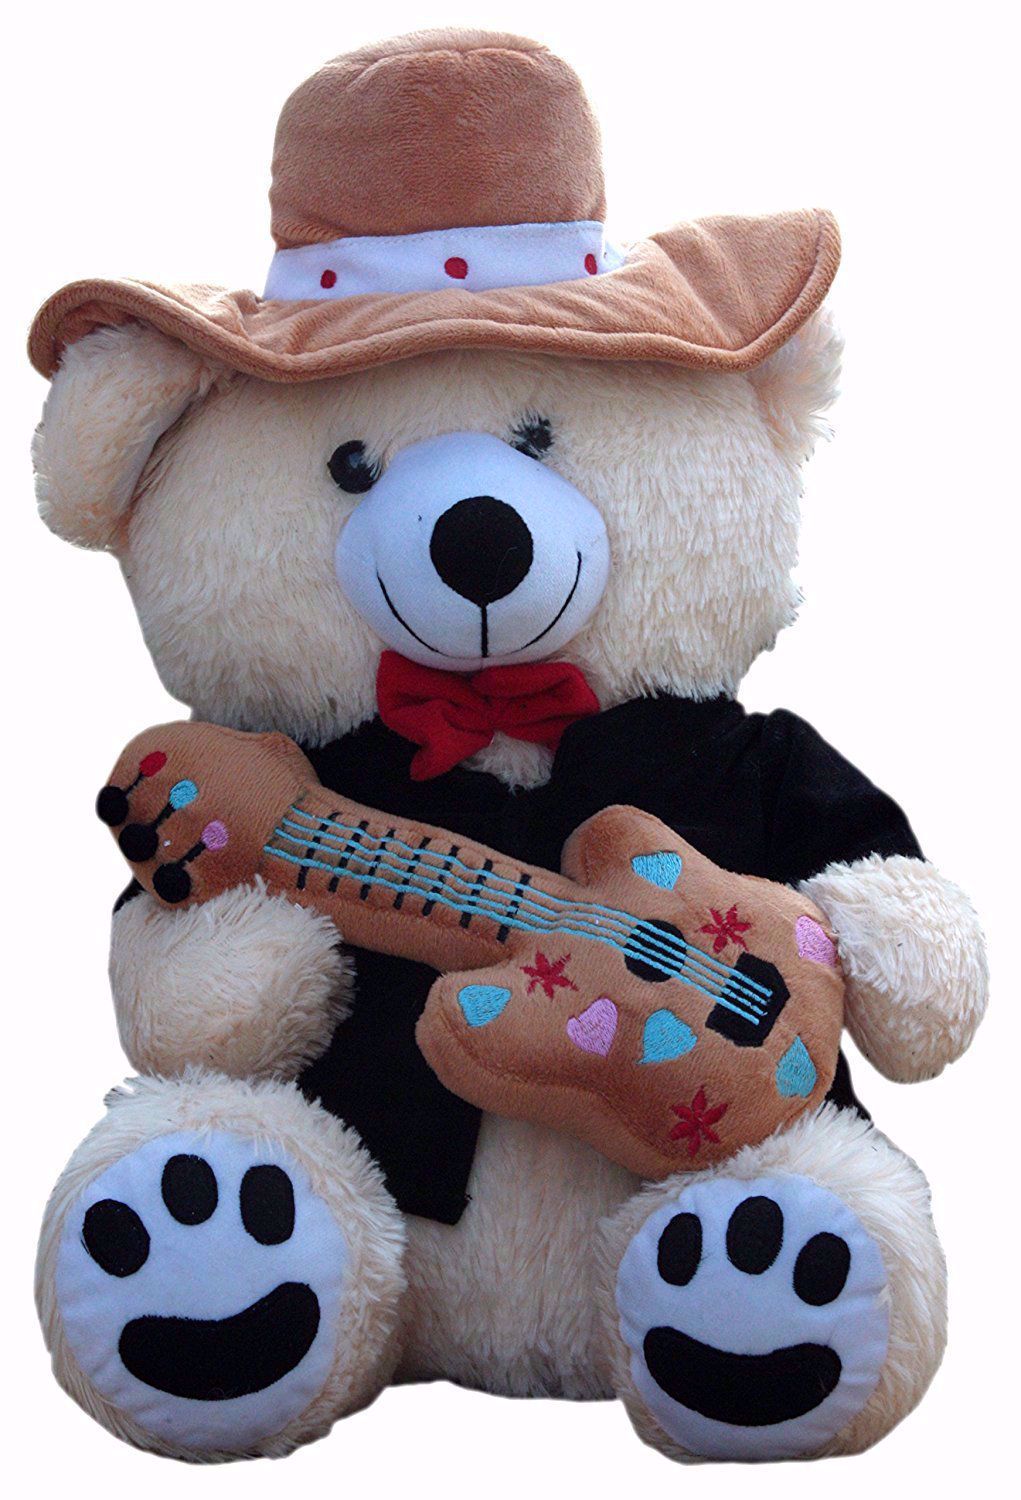 Rock star Teddy Bear, Rock star Teddy Bear Online, Teddy Bear Price-Buy  Baby Products, Online India at Best Price, Buy Baby Care Products At Low  Pricing